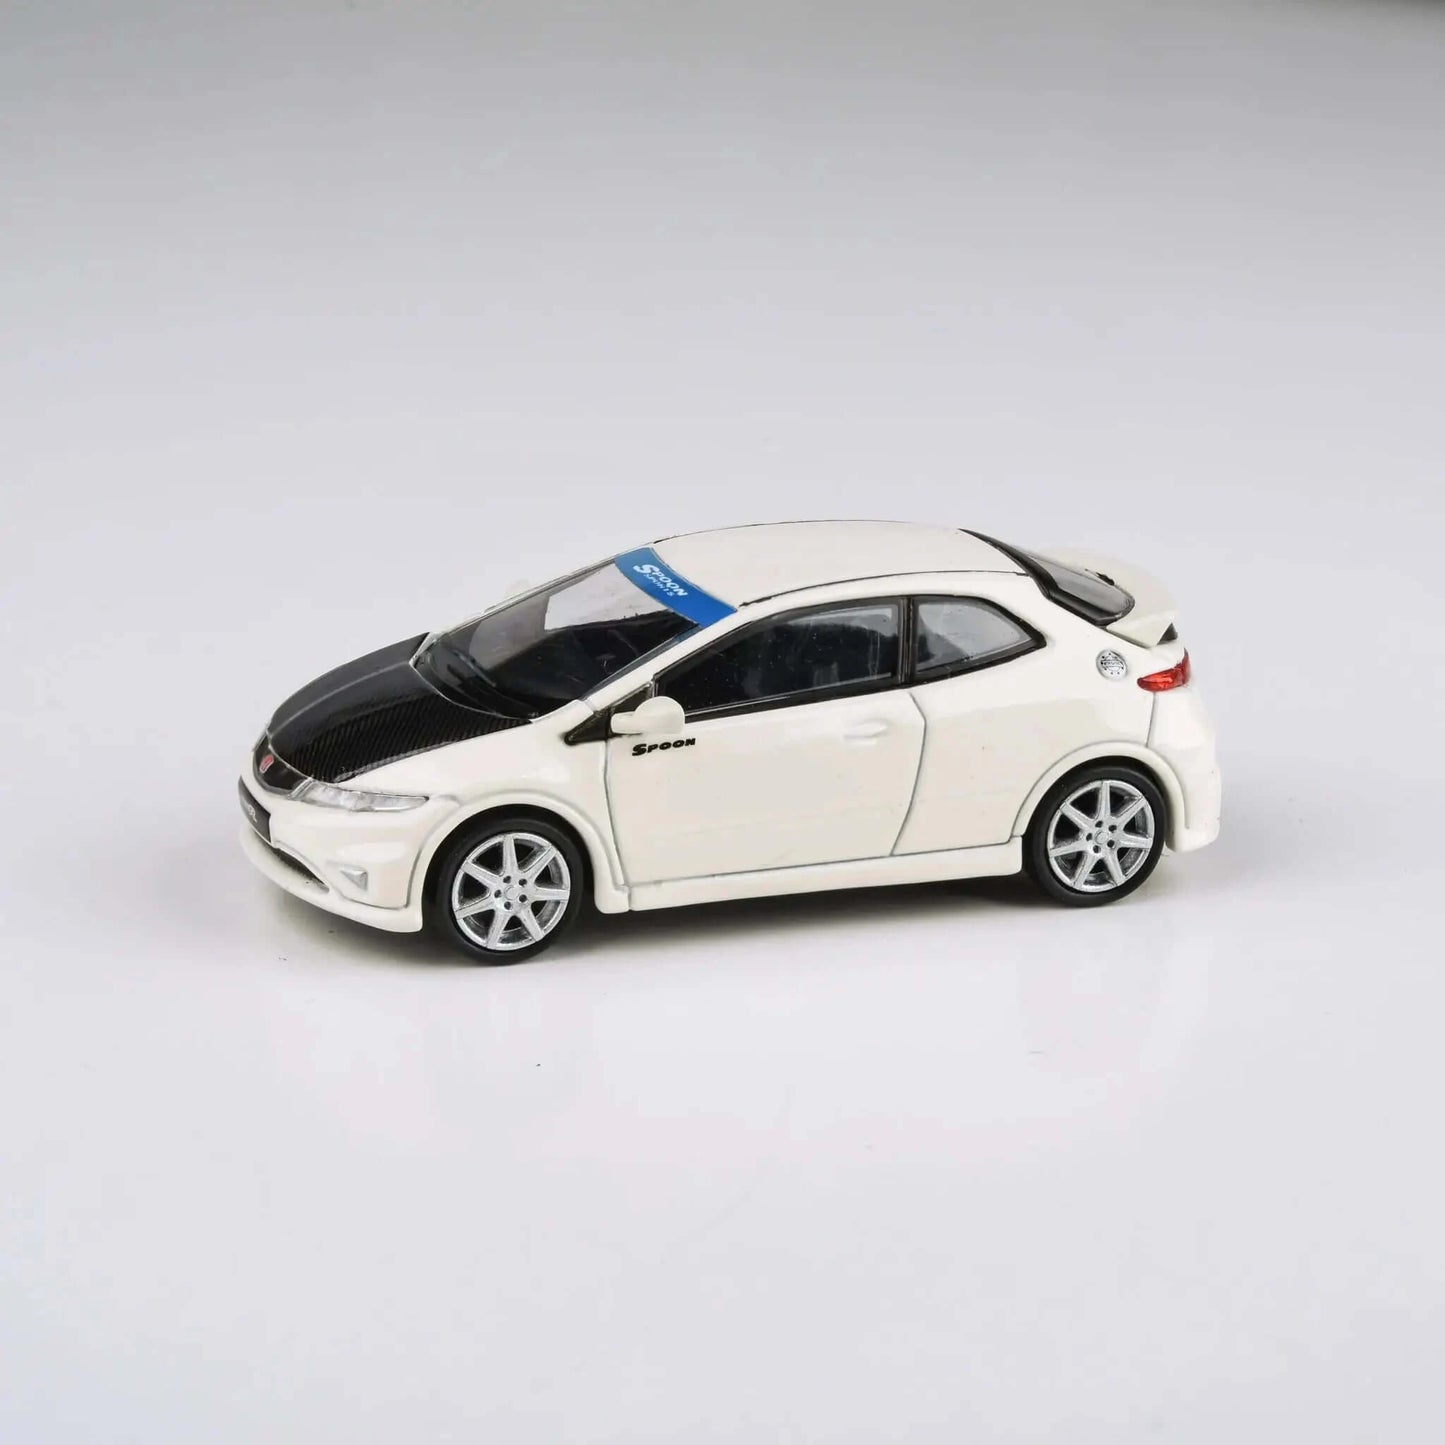 Honda Civic FN2 Type-R 2007 LHD white/carbon Para64 1/64 | Motors Miniatures